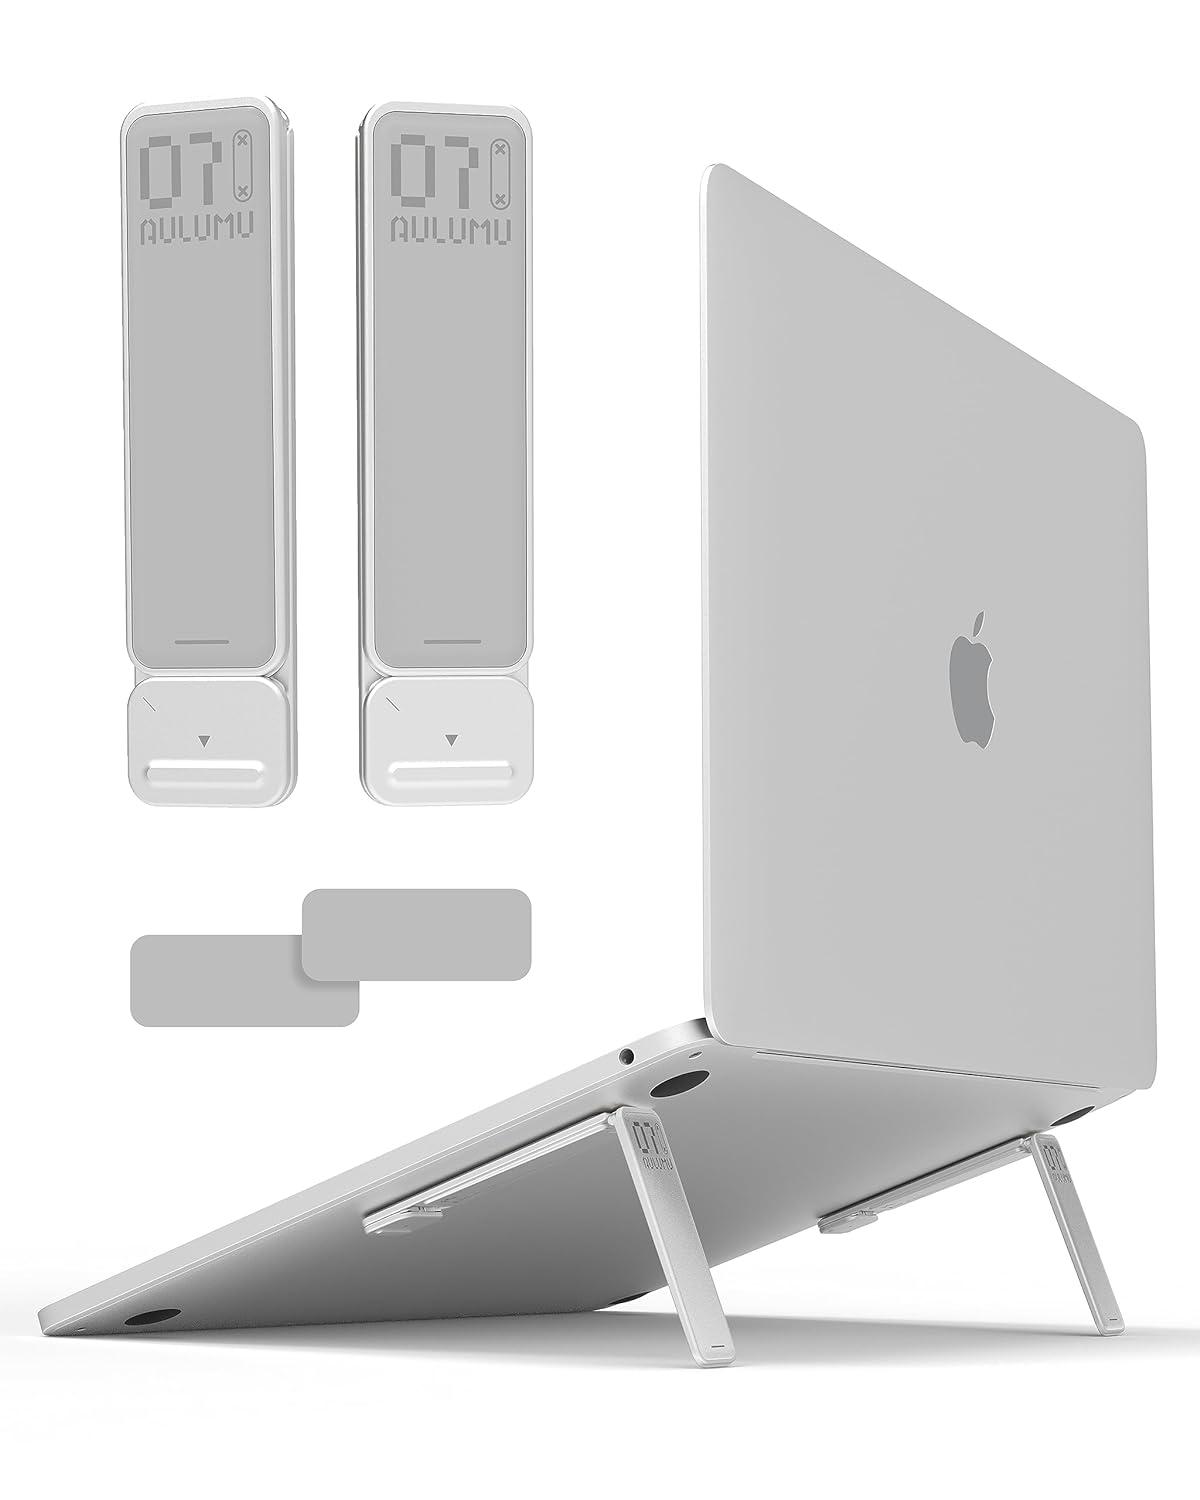 aulumu g07 pop up leg stand [business color scheme] super portable cooling laptop stand, ergonomic laptop riser lift for desk